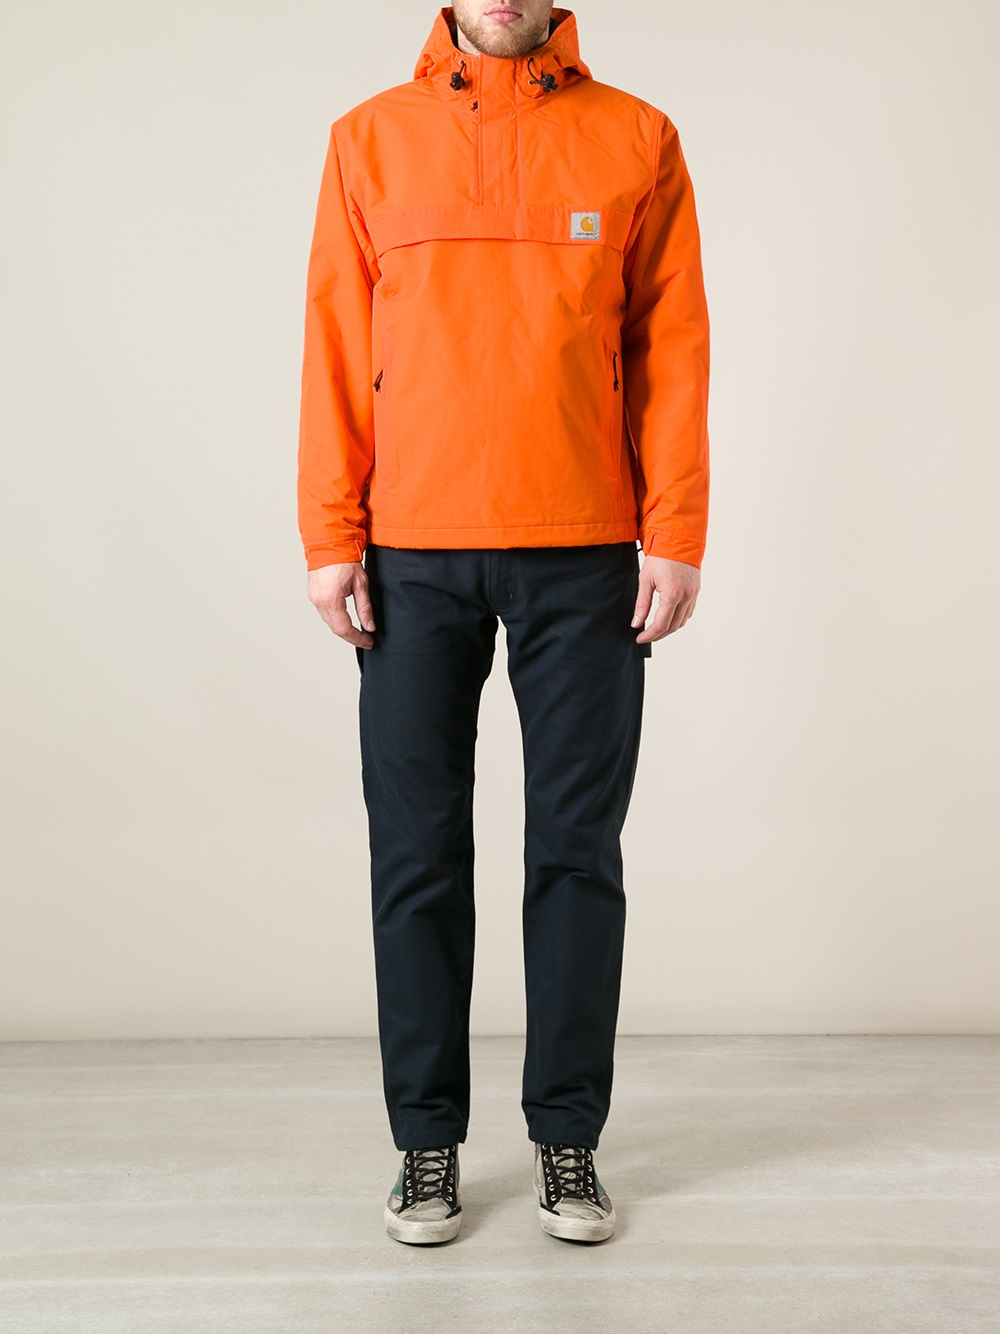 Carhartt Nimbus Pullover Jacket in Yellow & Orange (Orange) for 